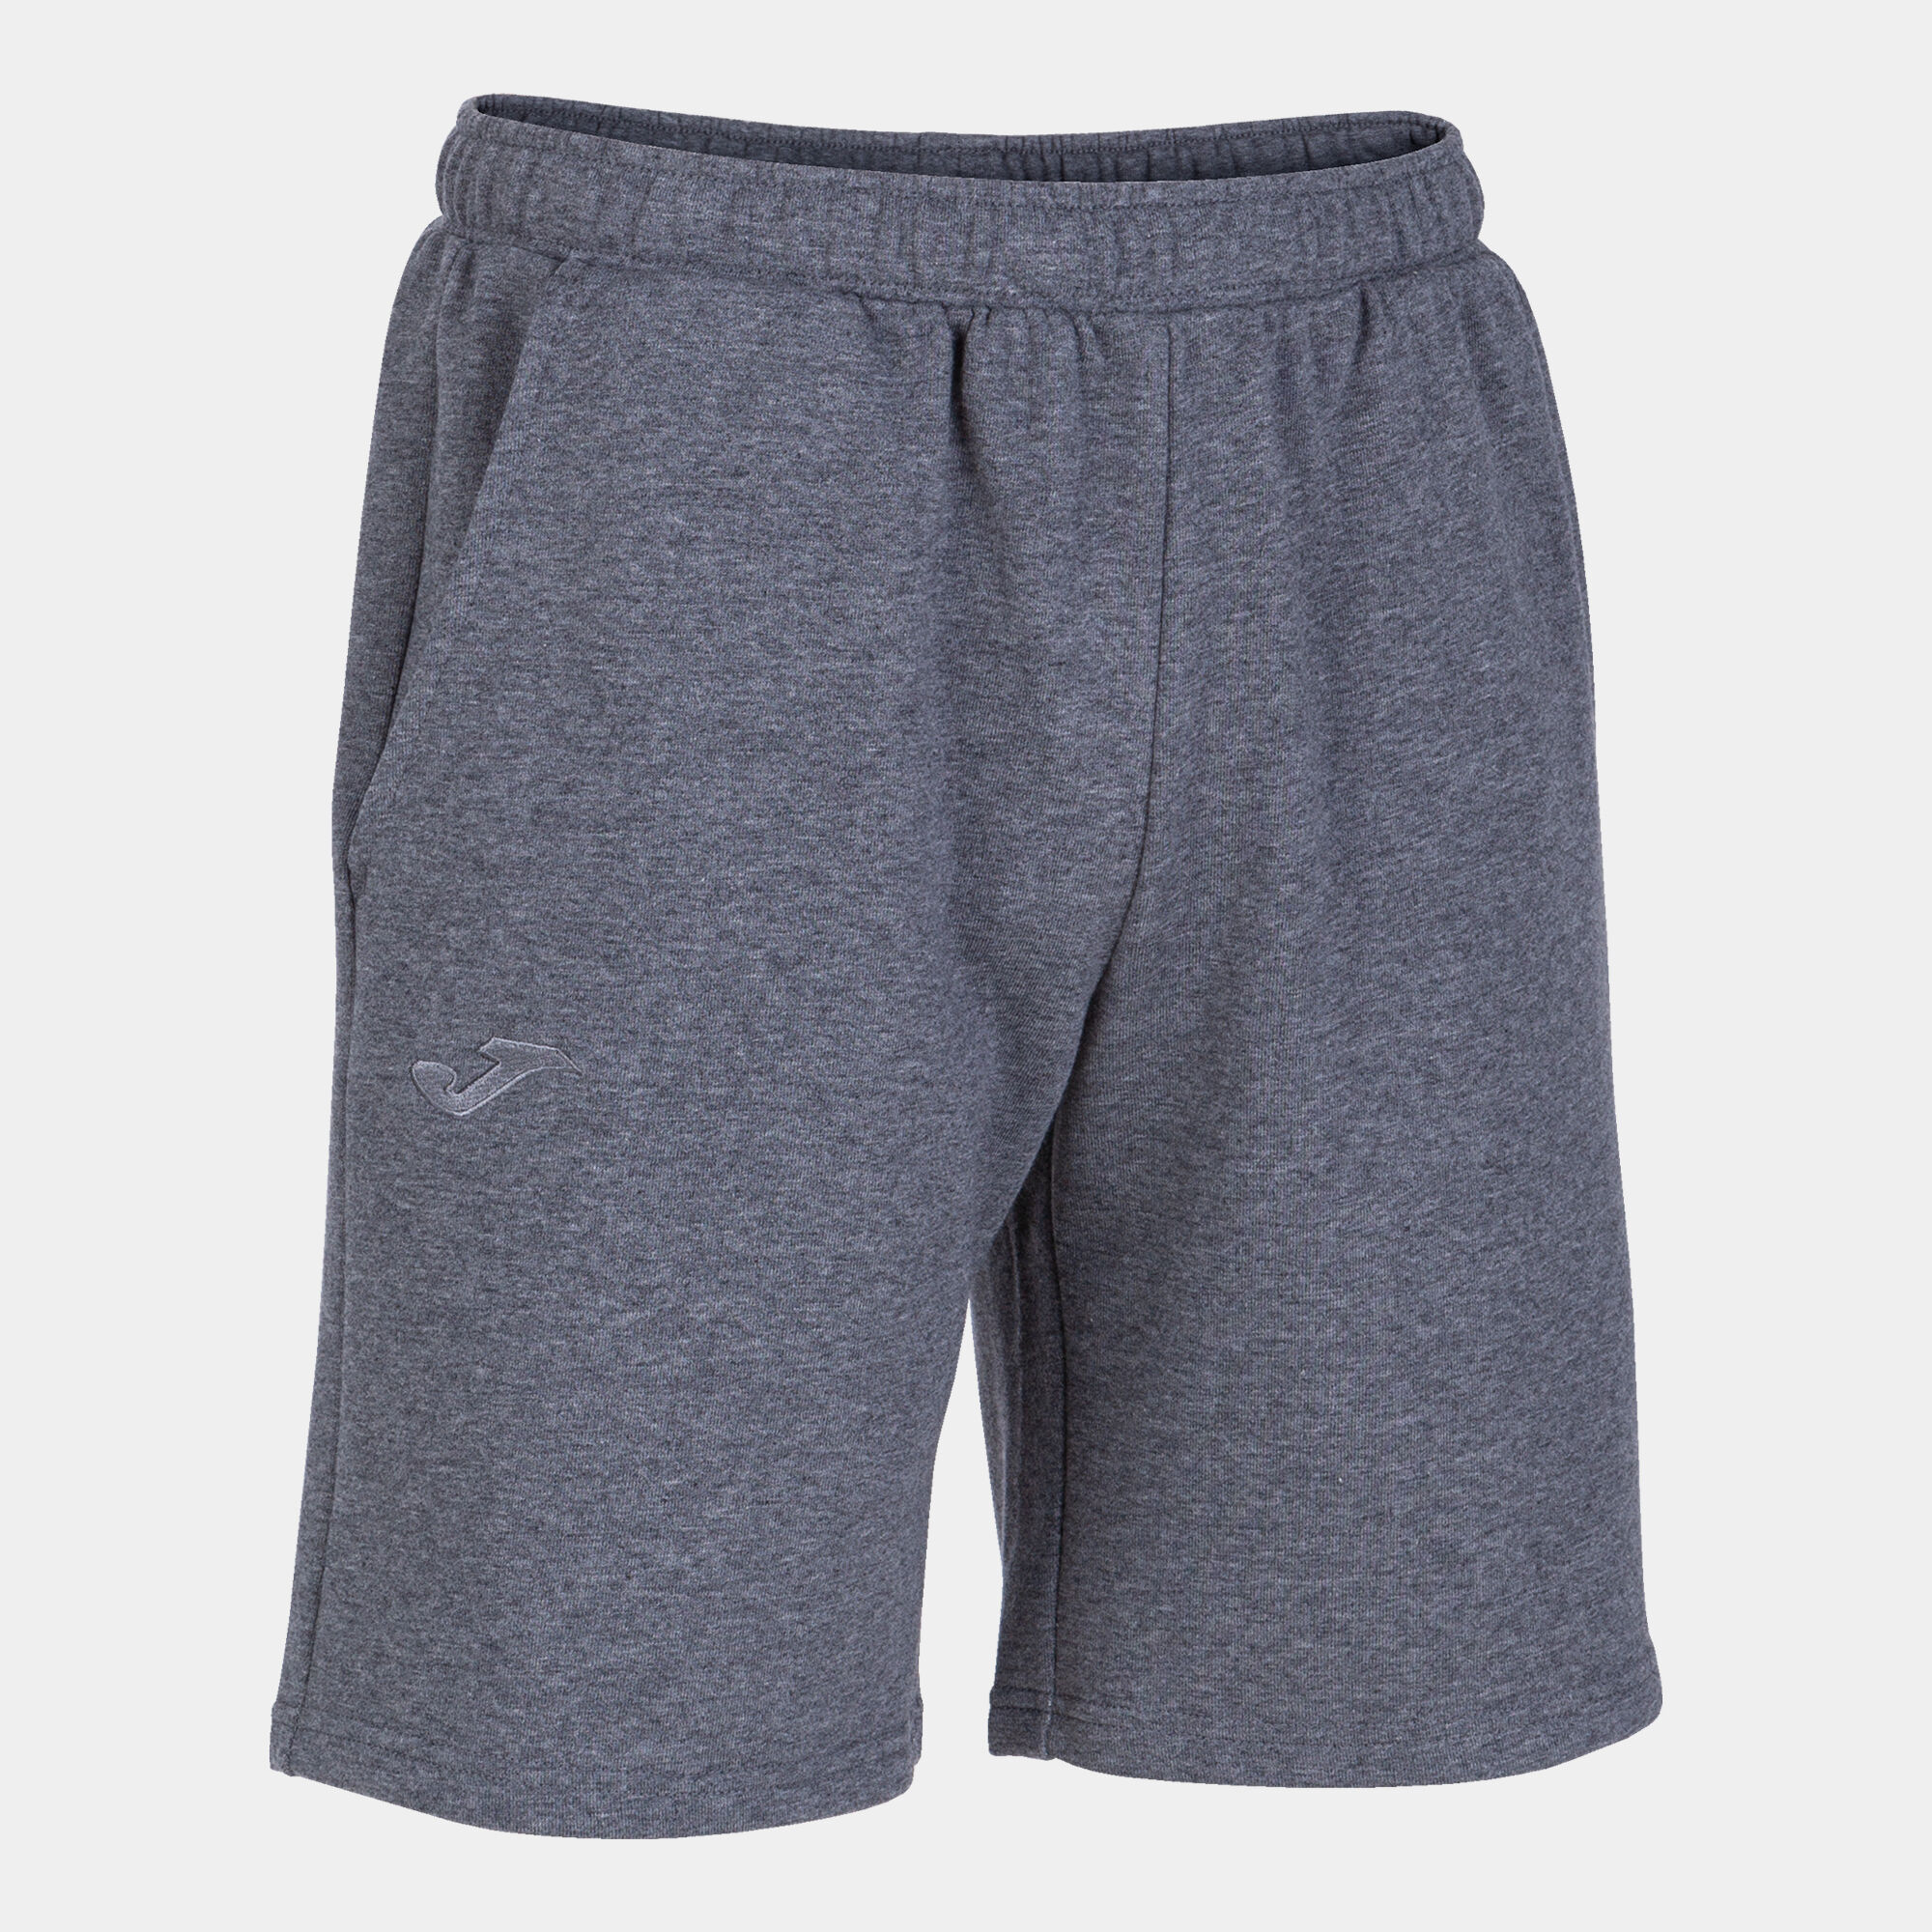 Bermuda shorts man Jungle melange gray